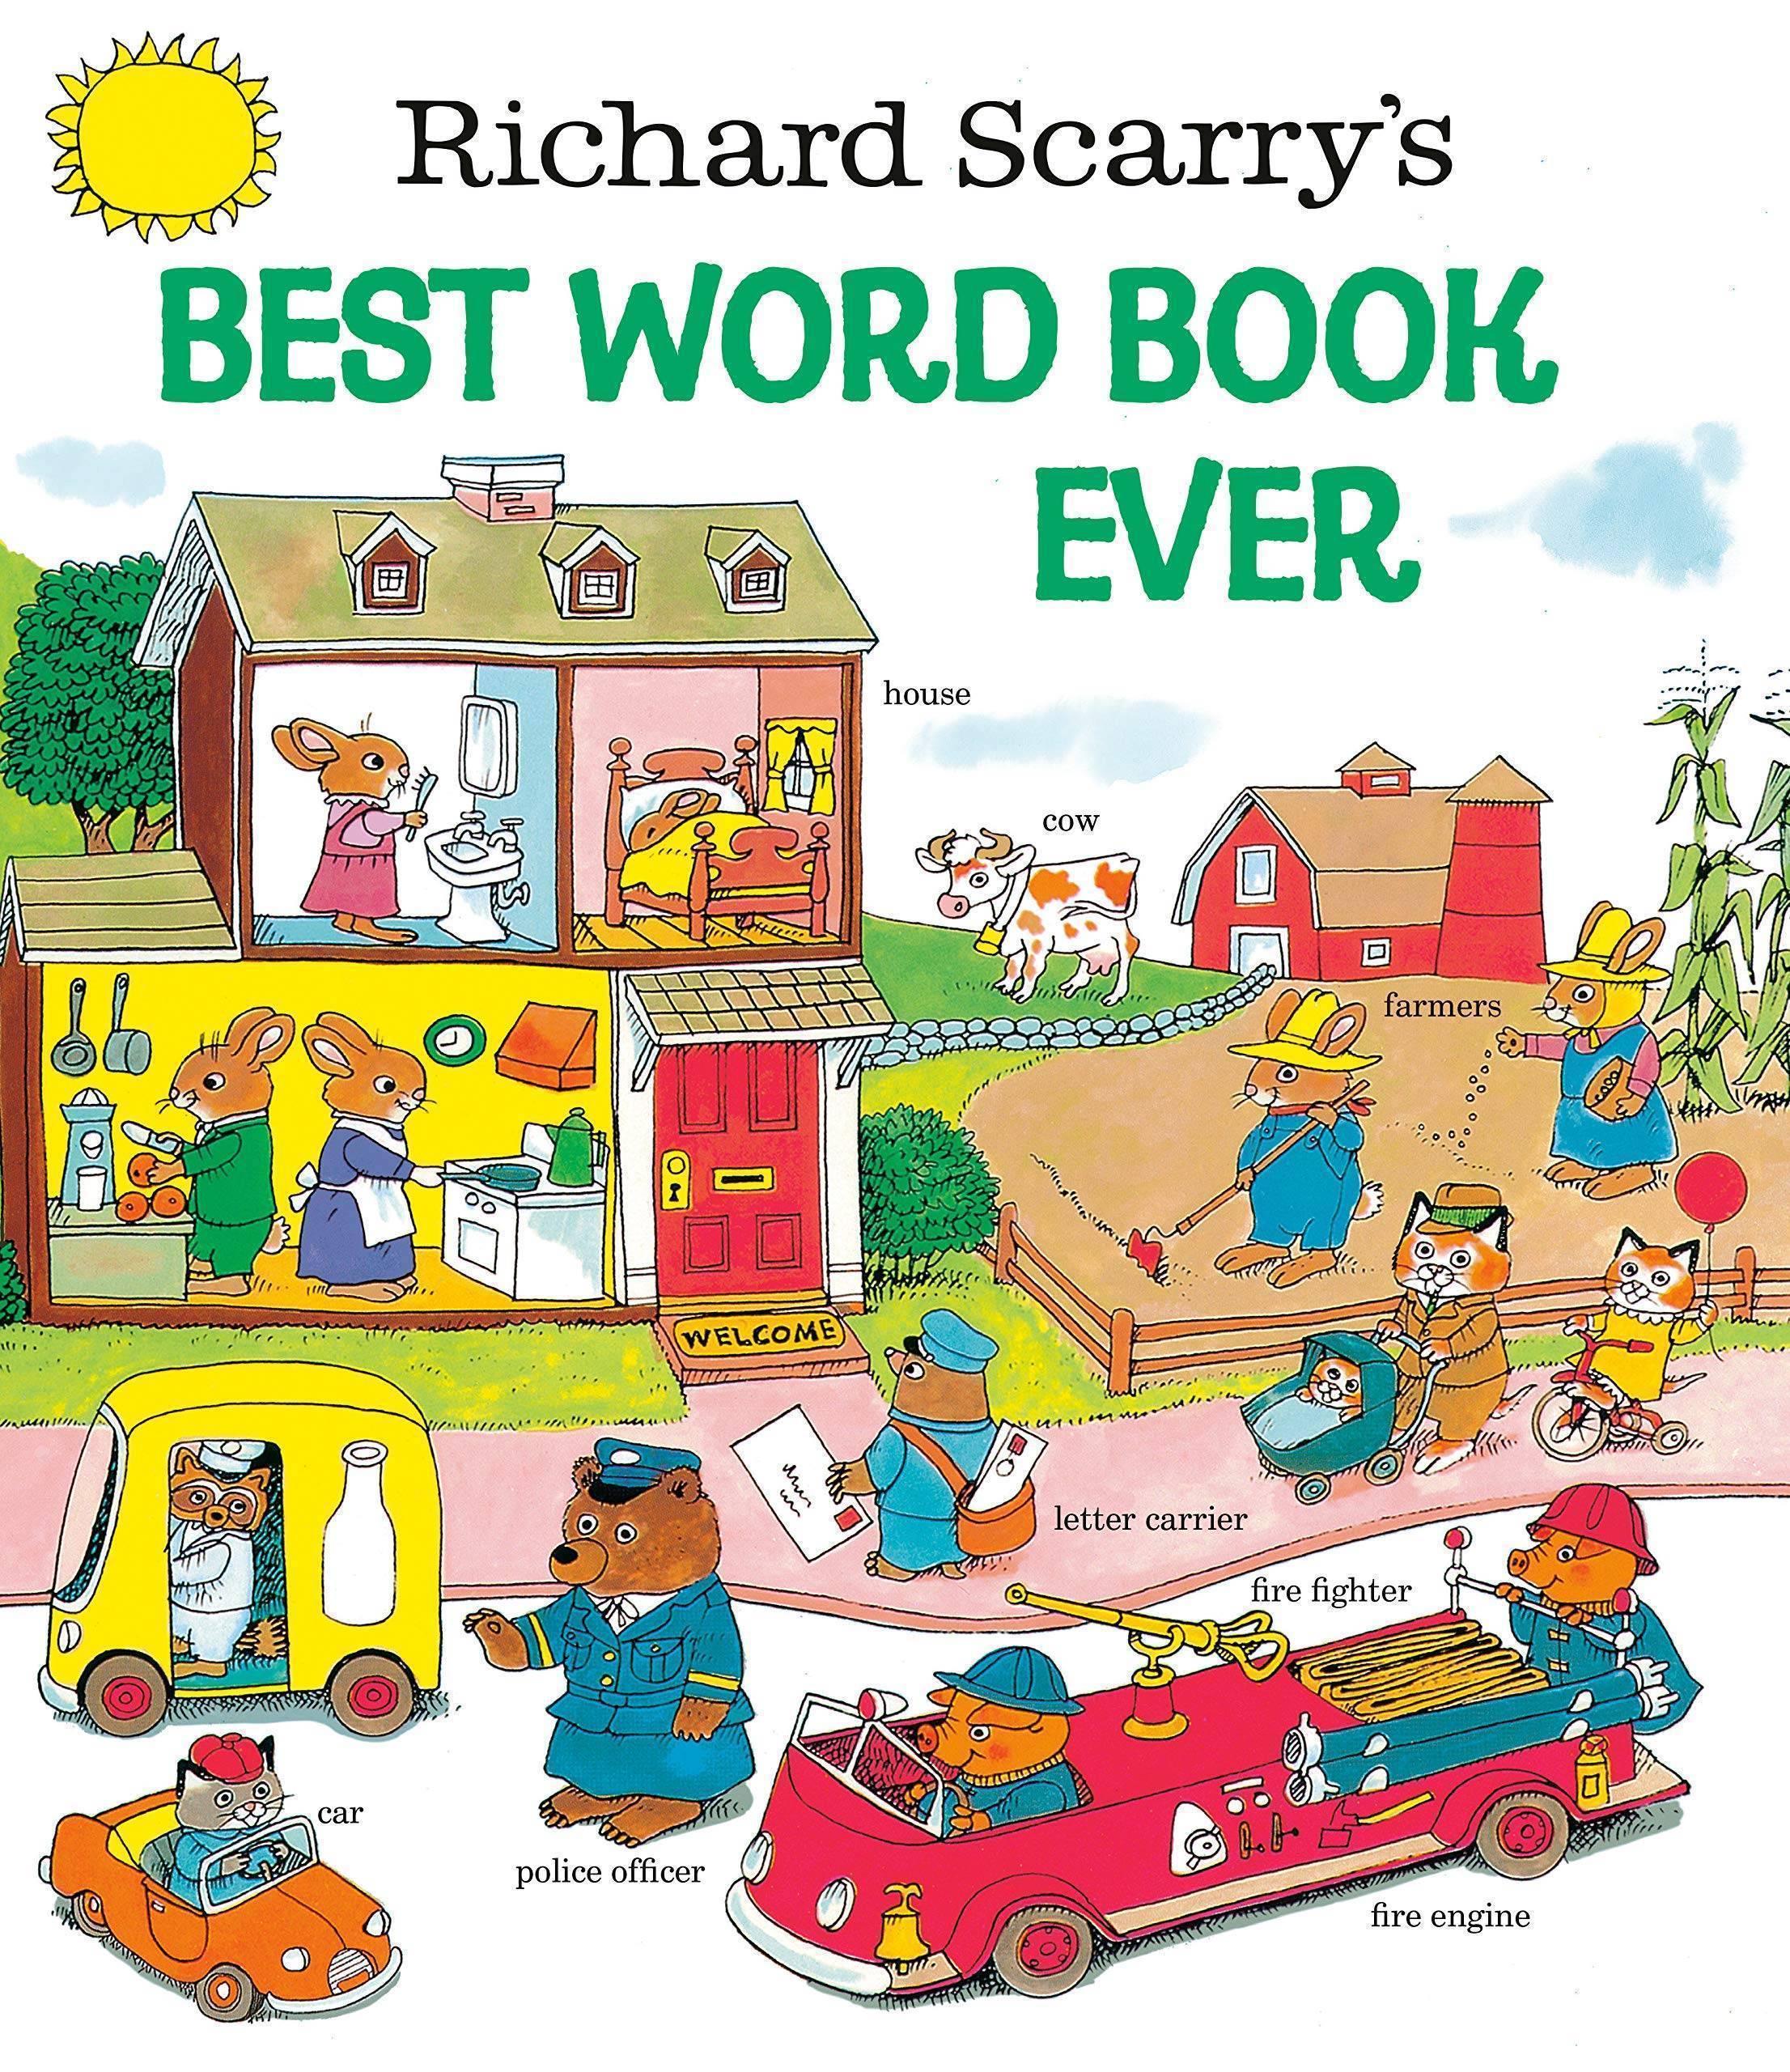 Rekindle Childhood Memories with Richard Scarry's "Best Word Book Ever"